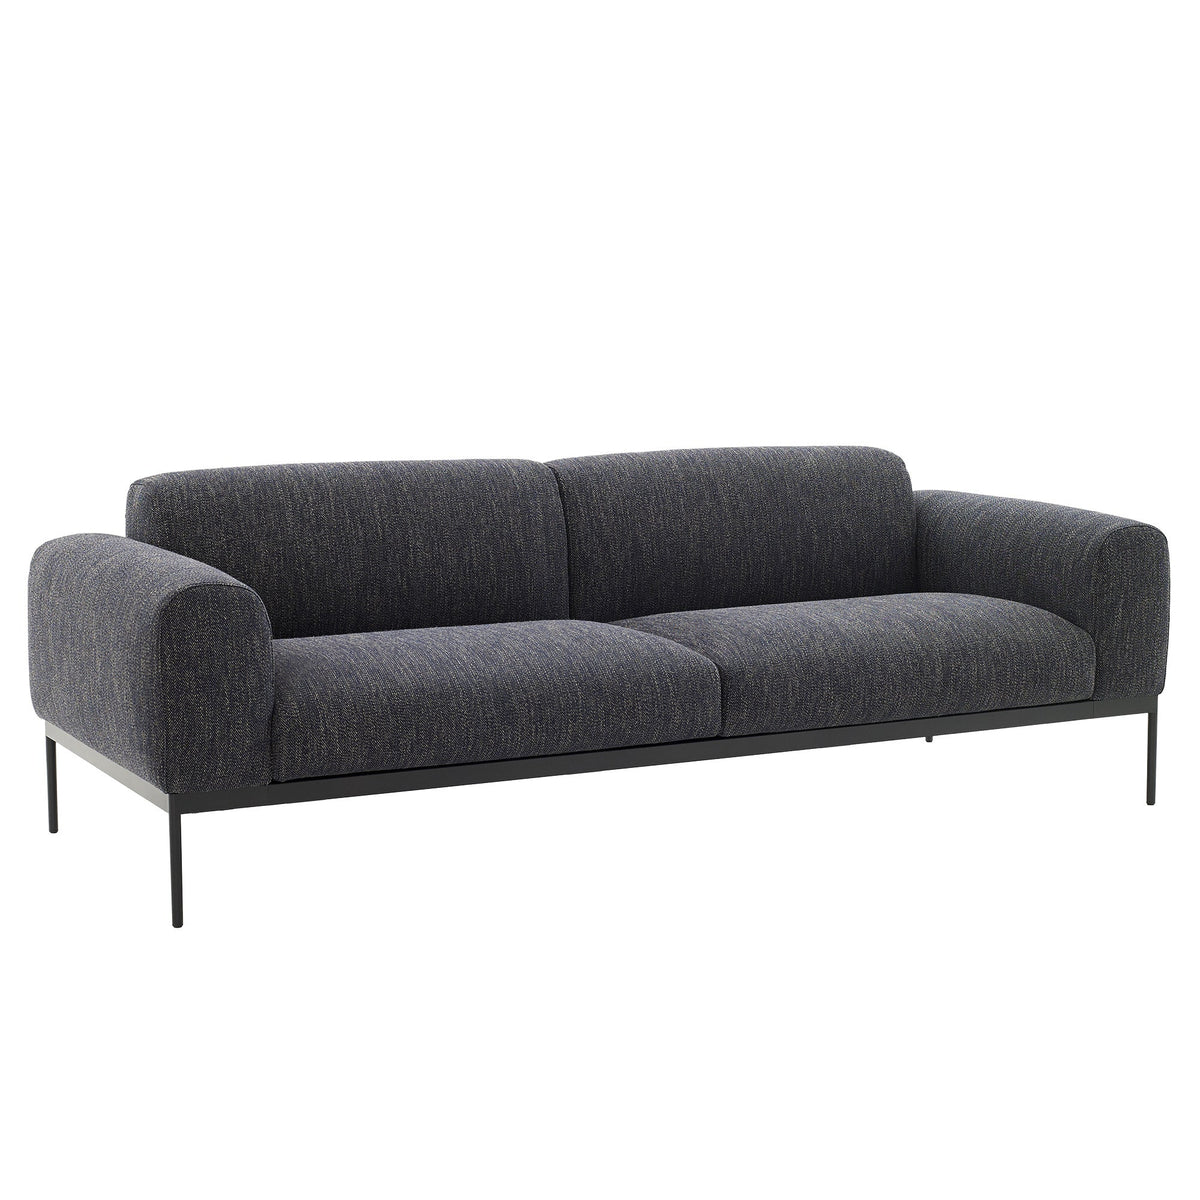 Adea Bon 230cm sohva - Laatukaluste